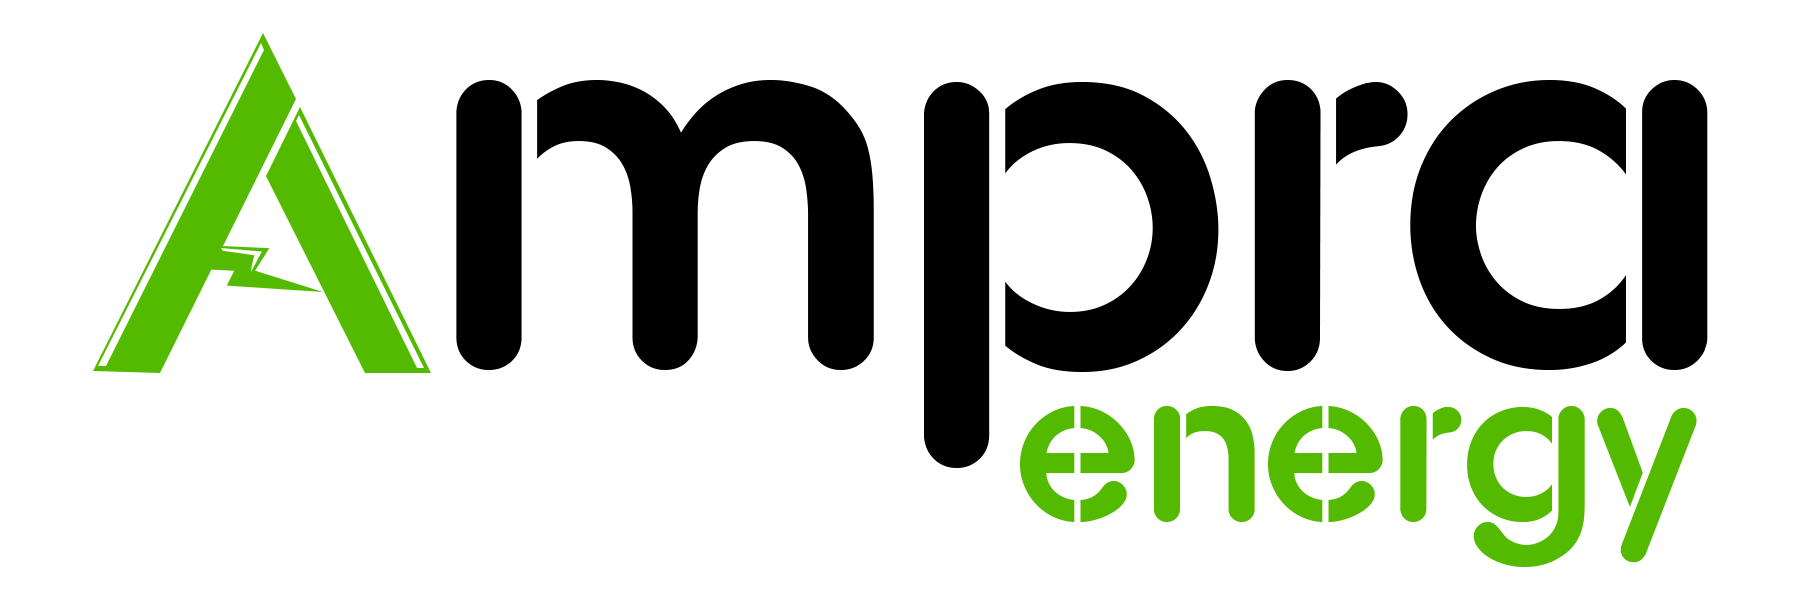 Ampra logo